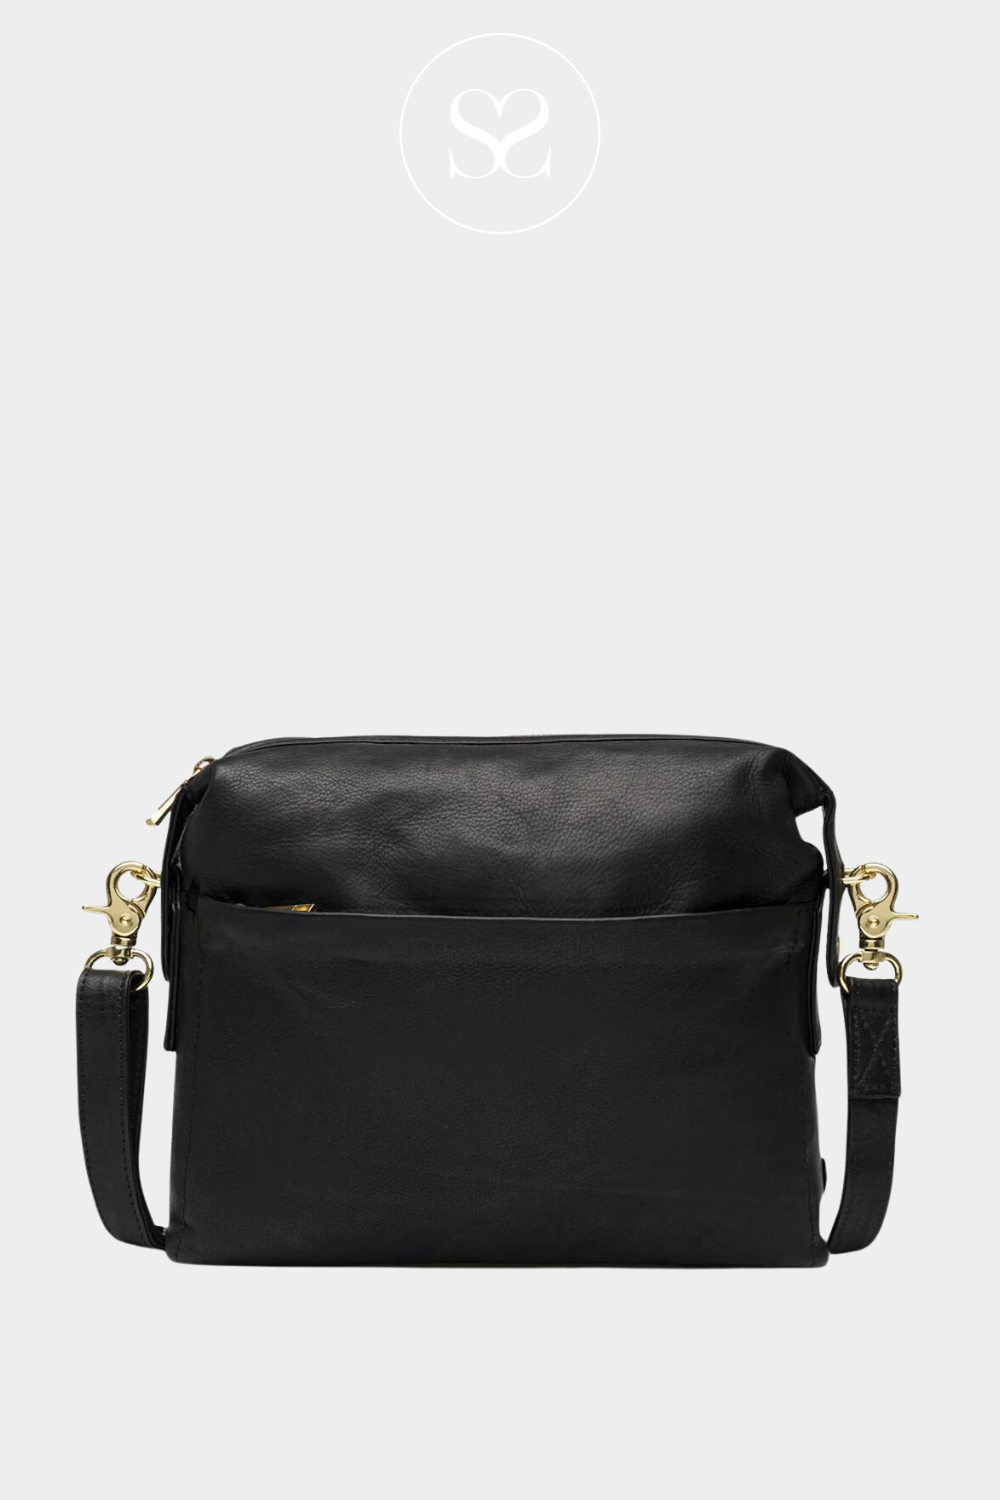 depeche 16020 black leather crossbody shoulder bag